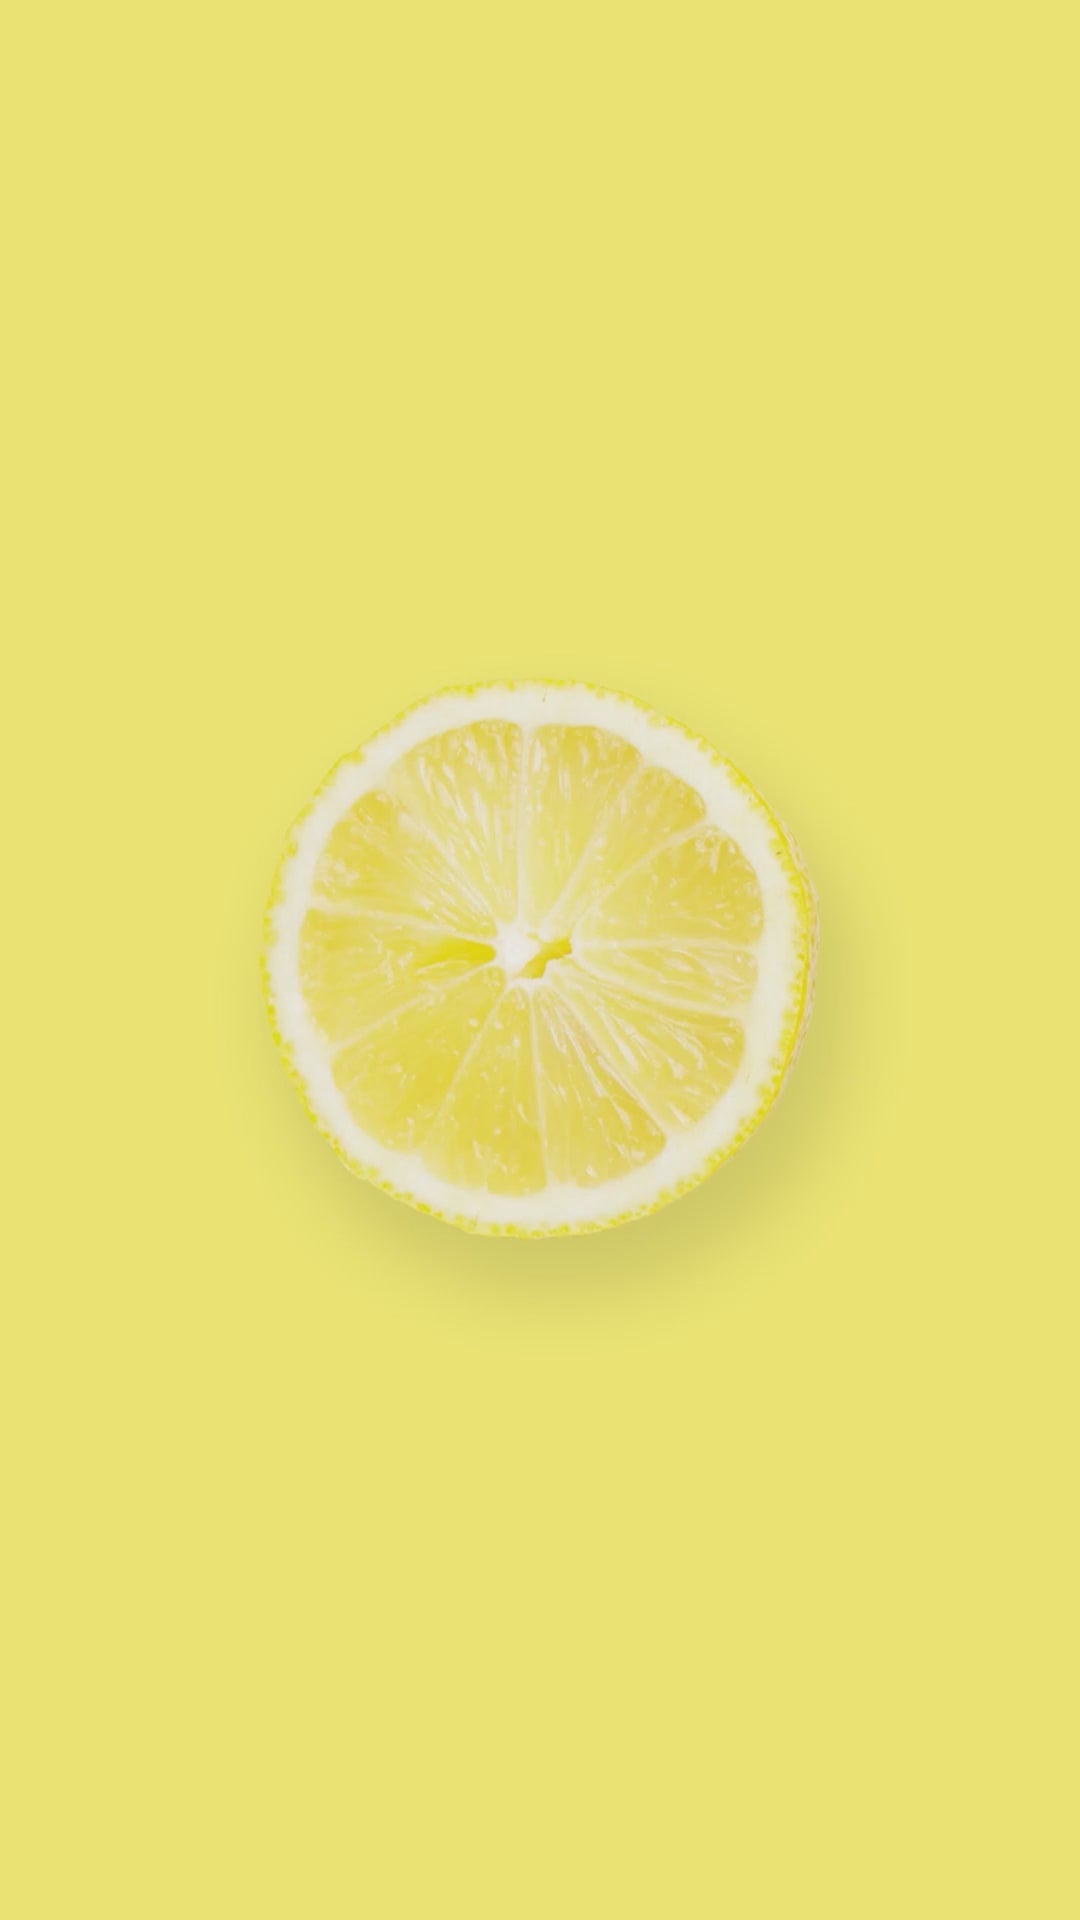 Nail polish remover wipes - Lemon (30 wipes)